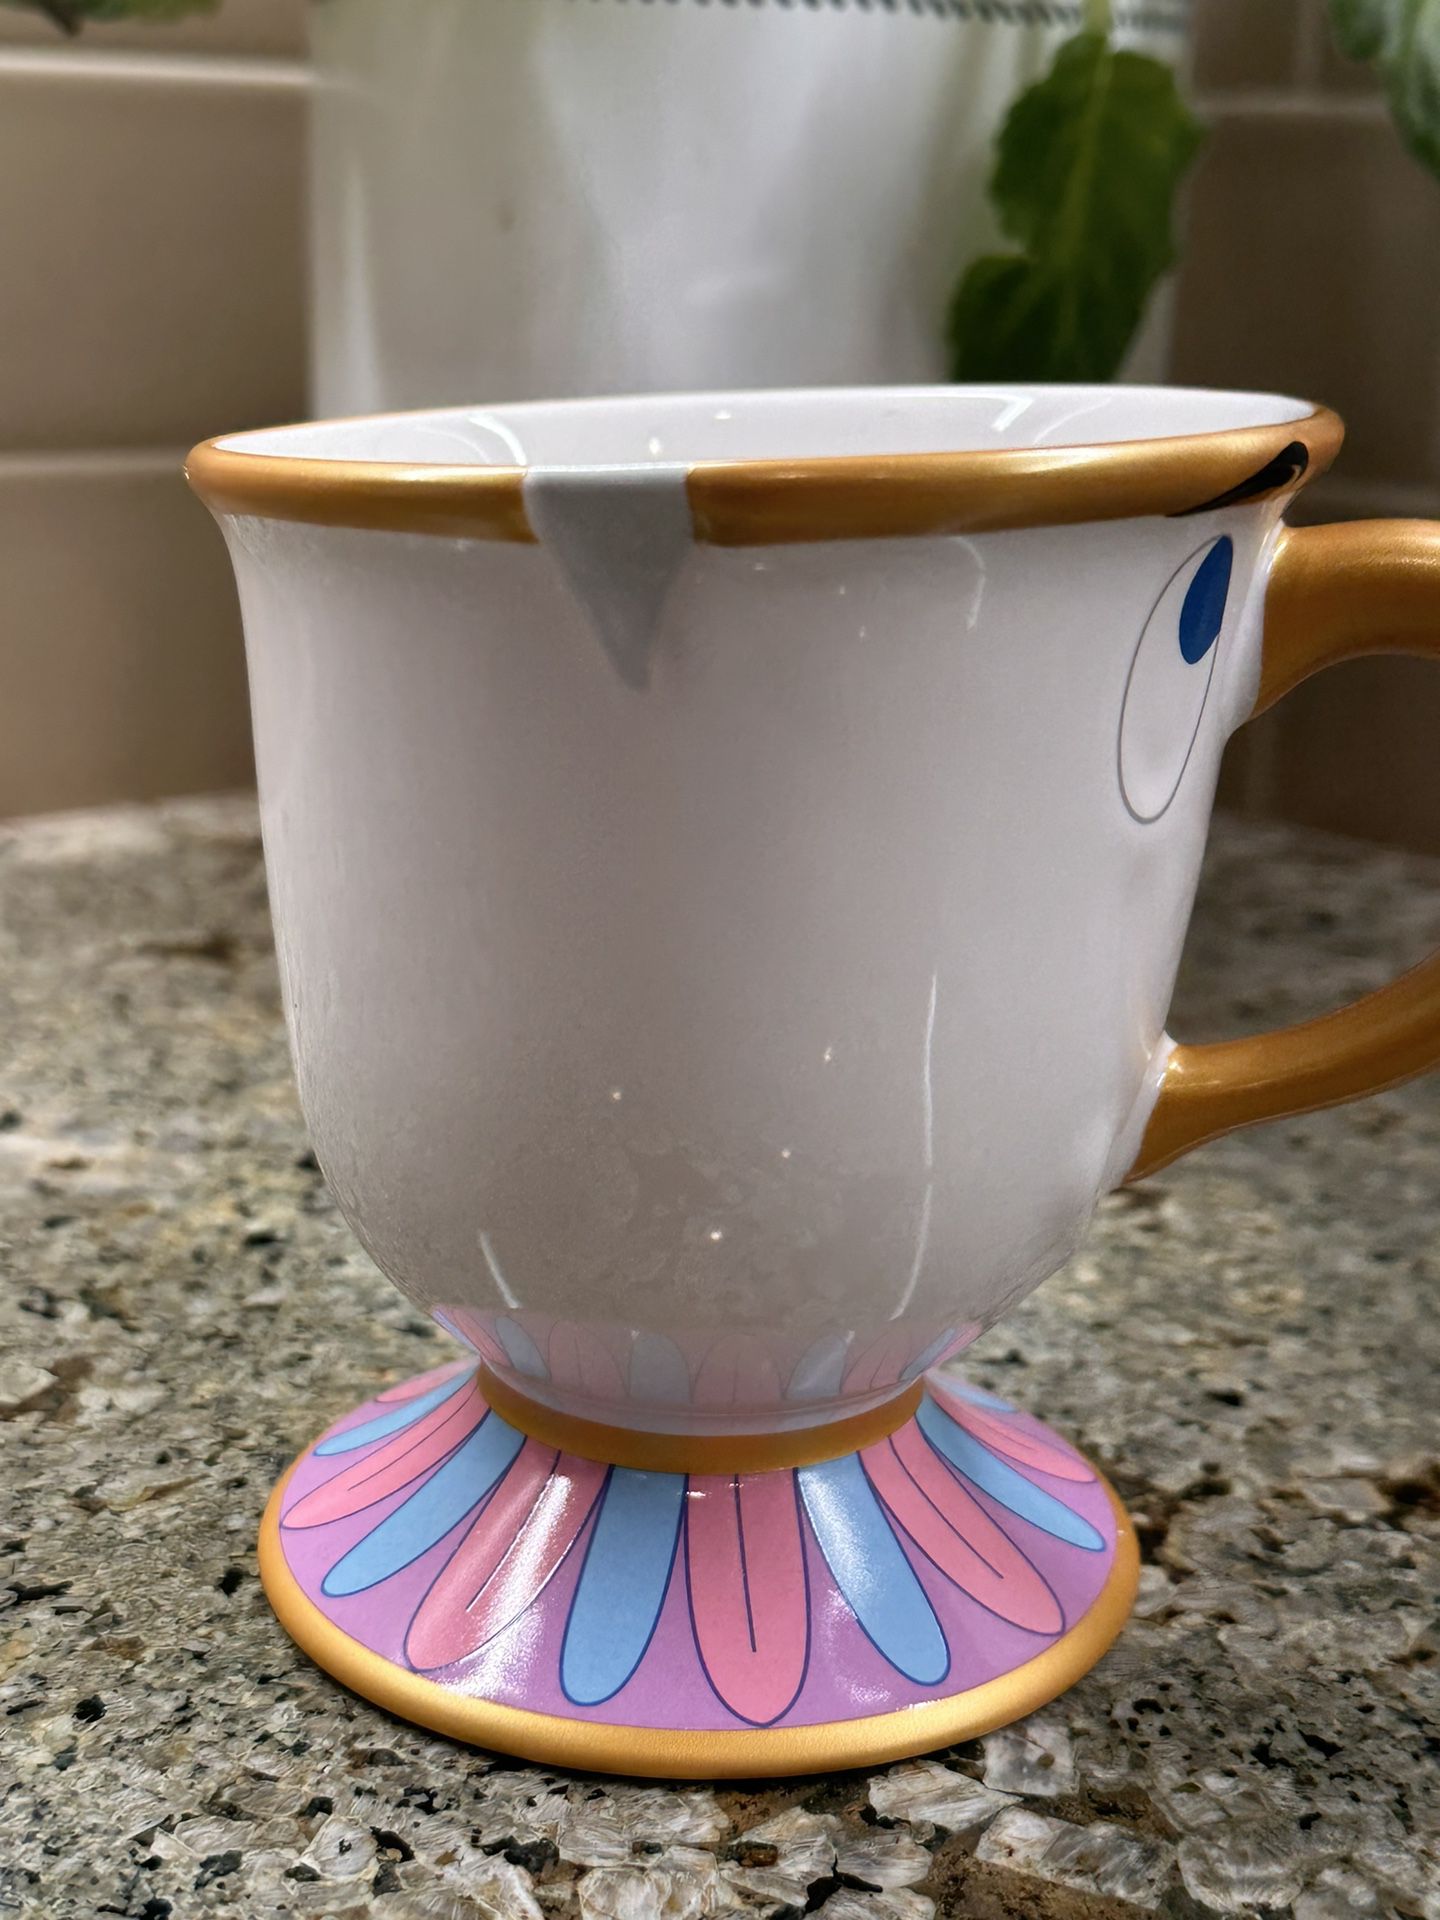 Disney Parks Beauty and The Beast Chip Ceramic Mug